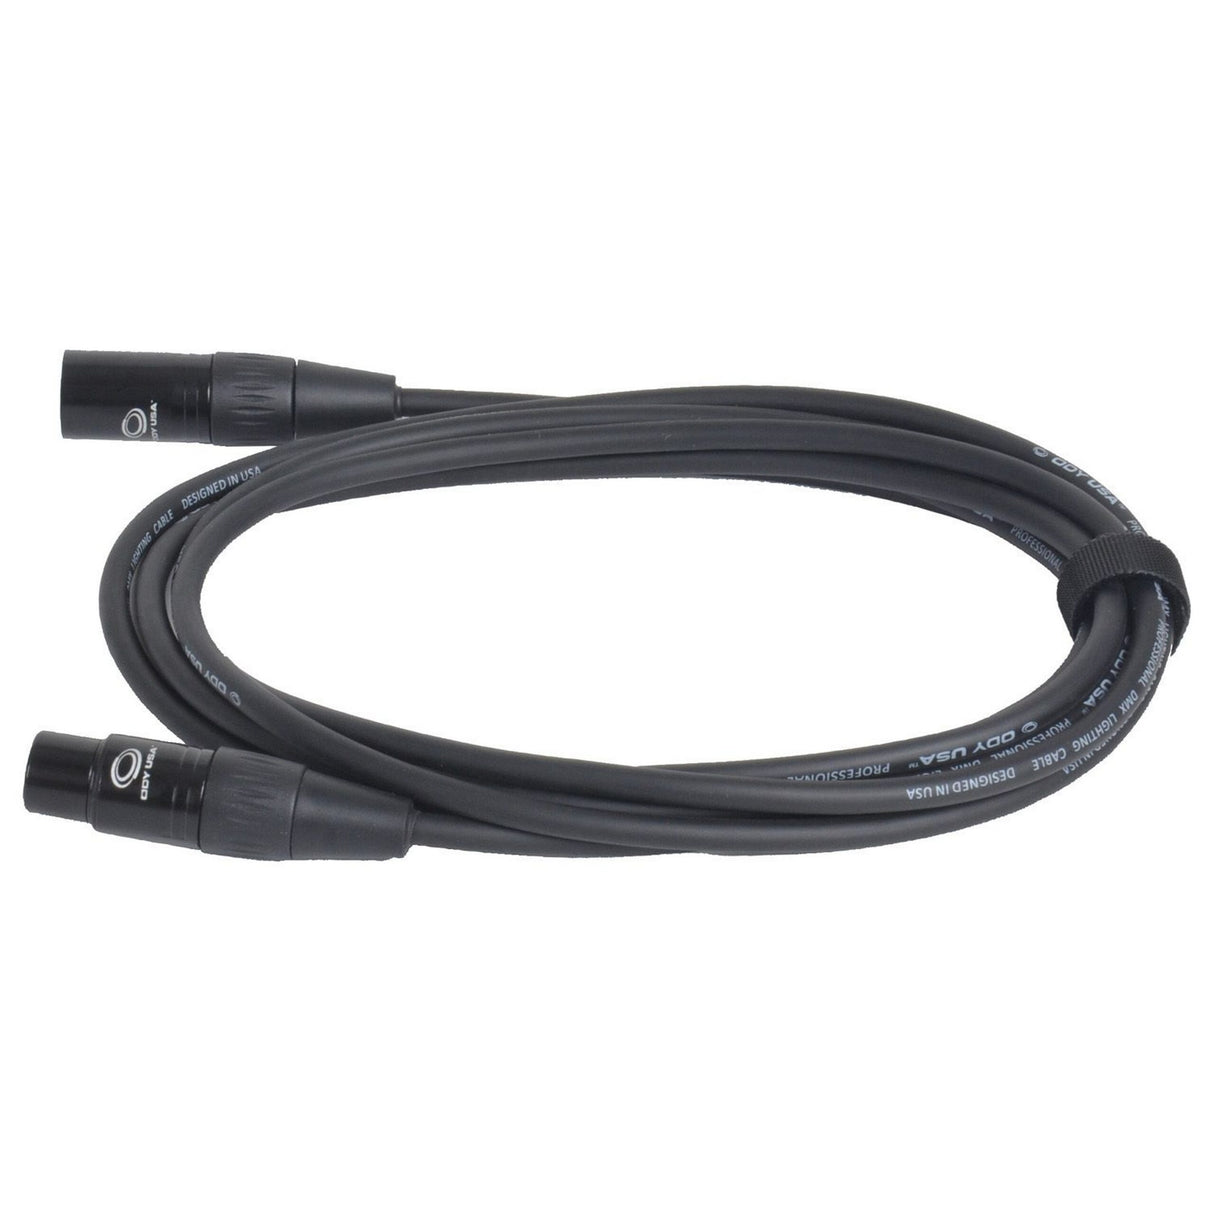 Odyssey OSP105DMX3 DMX XLR Male to XLR Female Cable, 3P Pro, 5-Feet